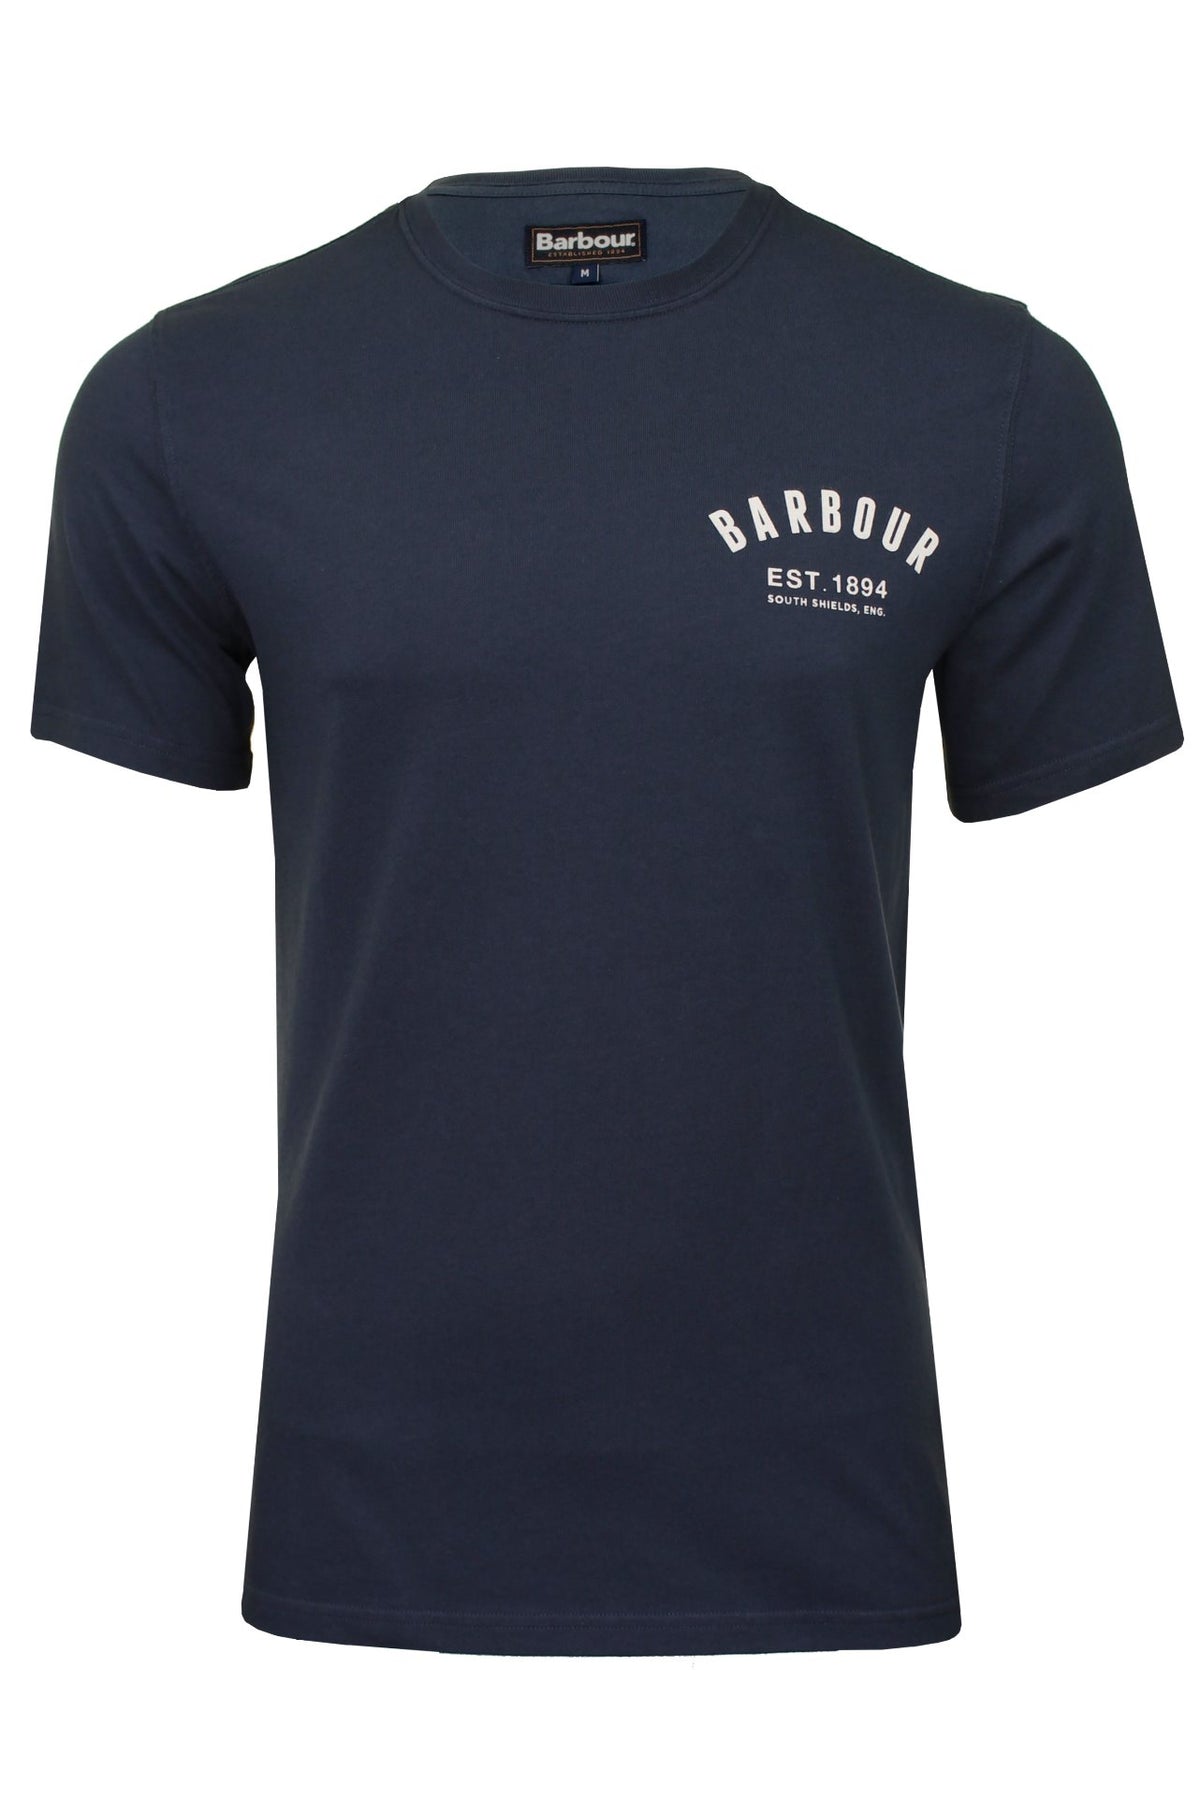 Barbour Men's 'Preppy Tee' T-Shirt - Short Sleeved, 01, Mts0502